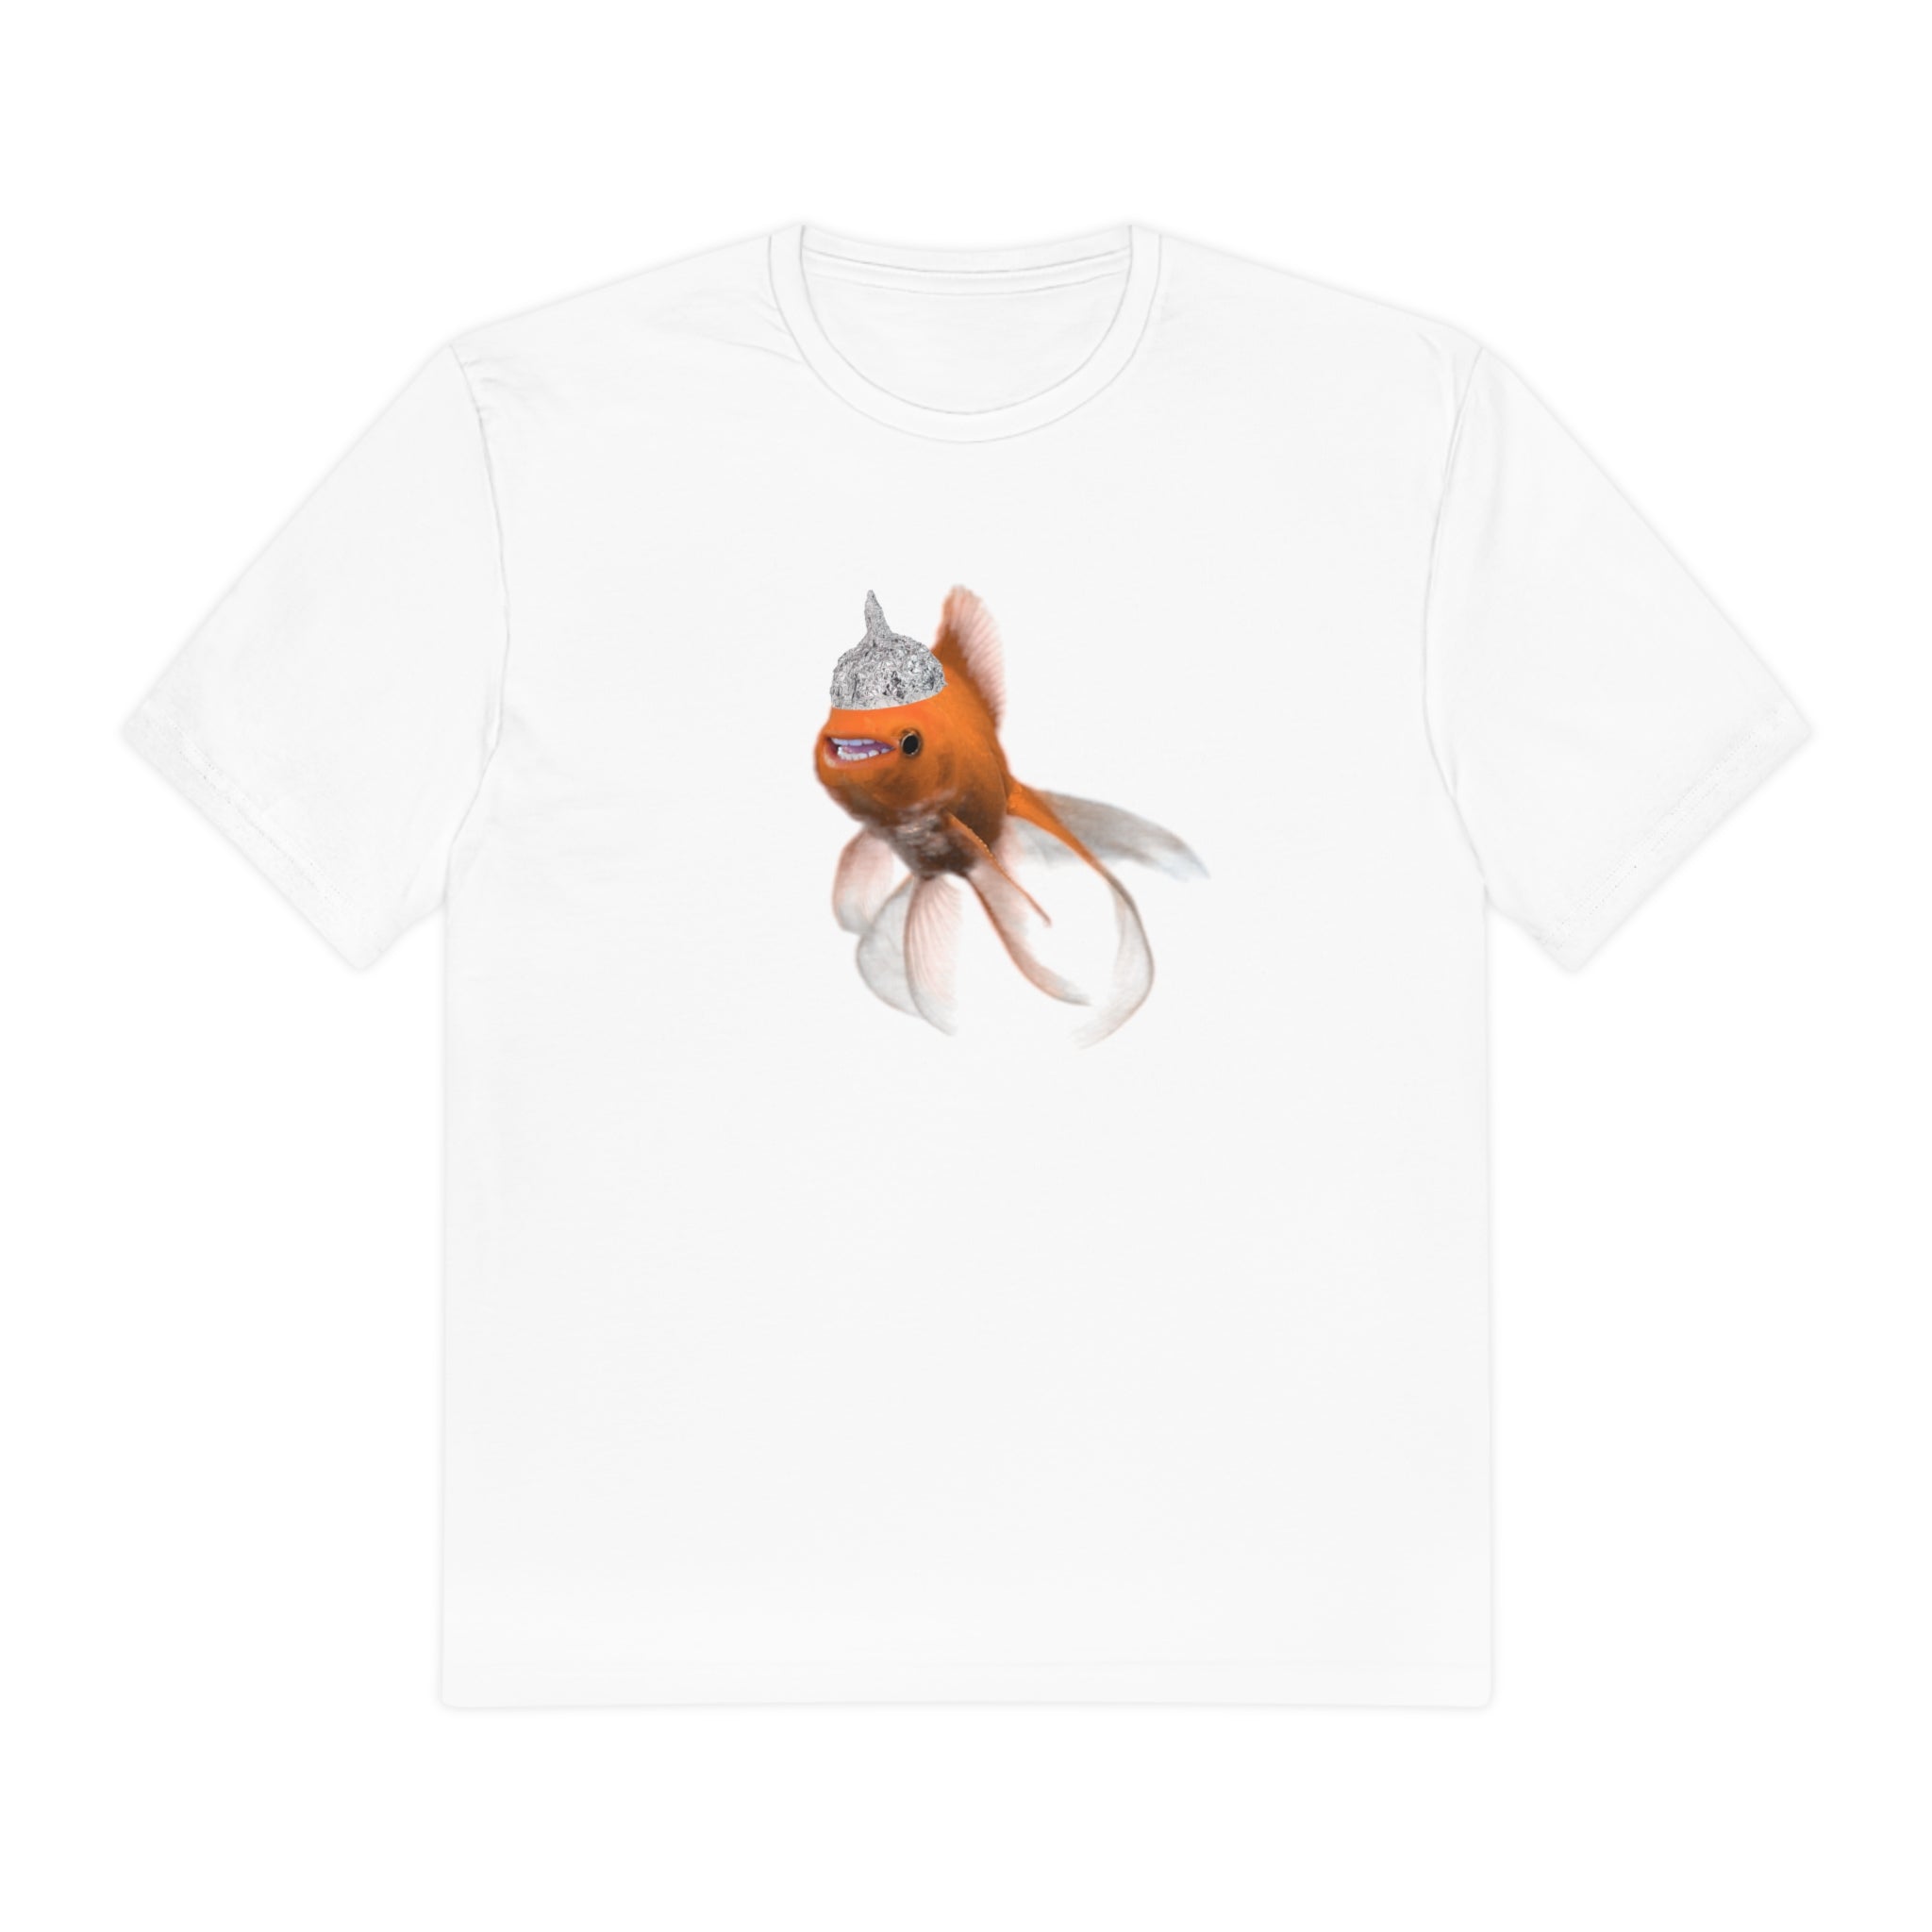 Hecklefish Loose Cut Unisex T-Shirt